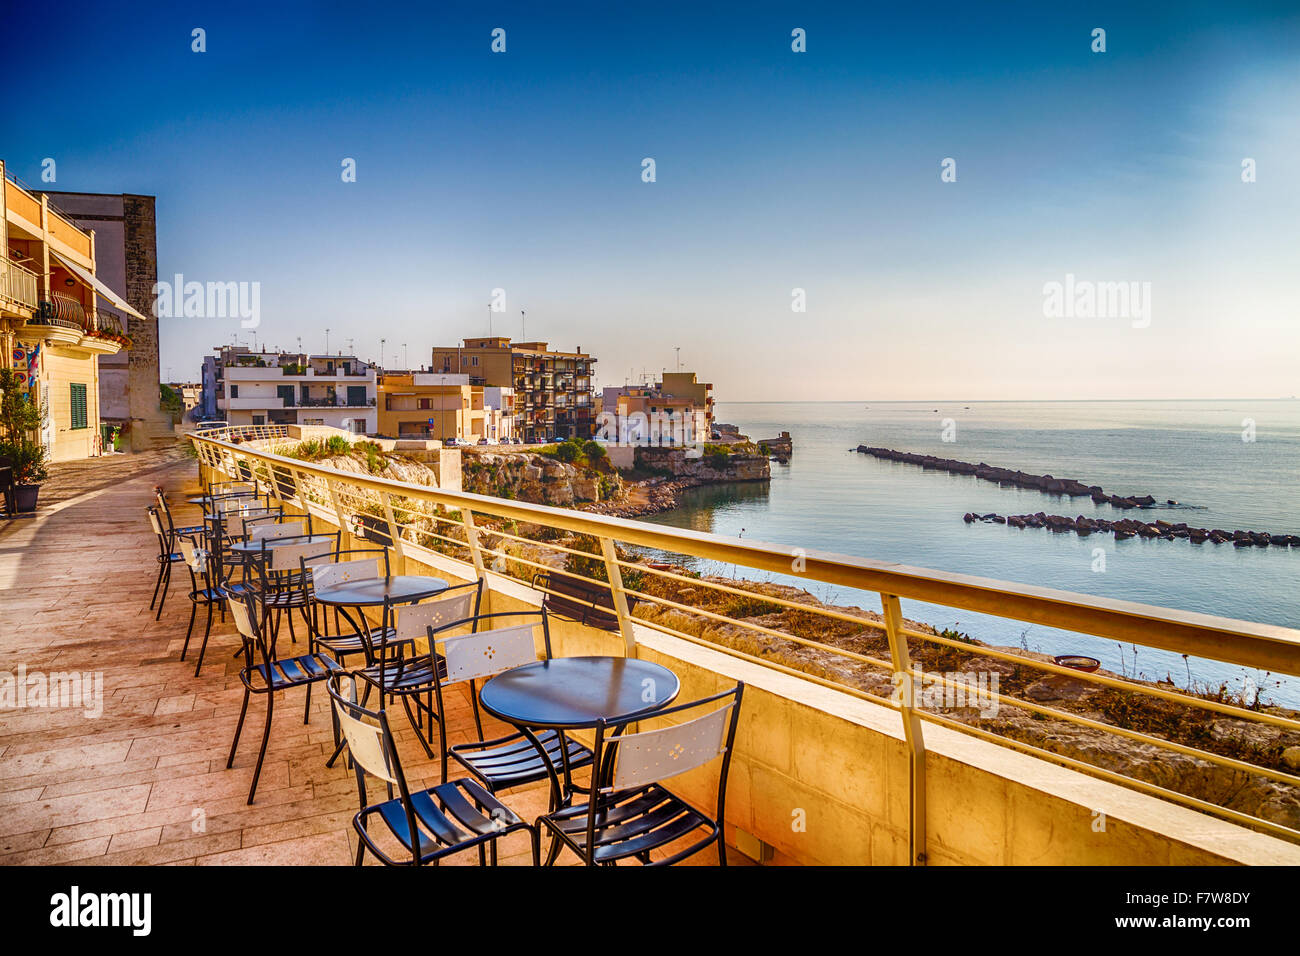 Coffee tables on Bay of Otranto, Greek-Messapian city on the Adriatic Sea in Italy Stock Photo